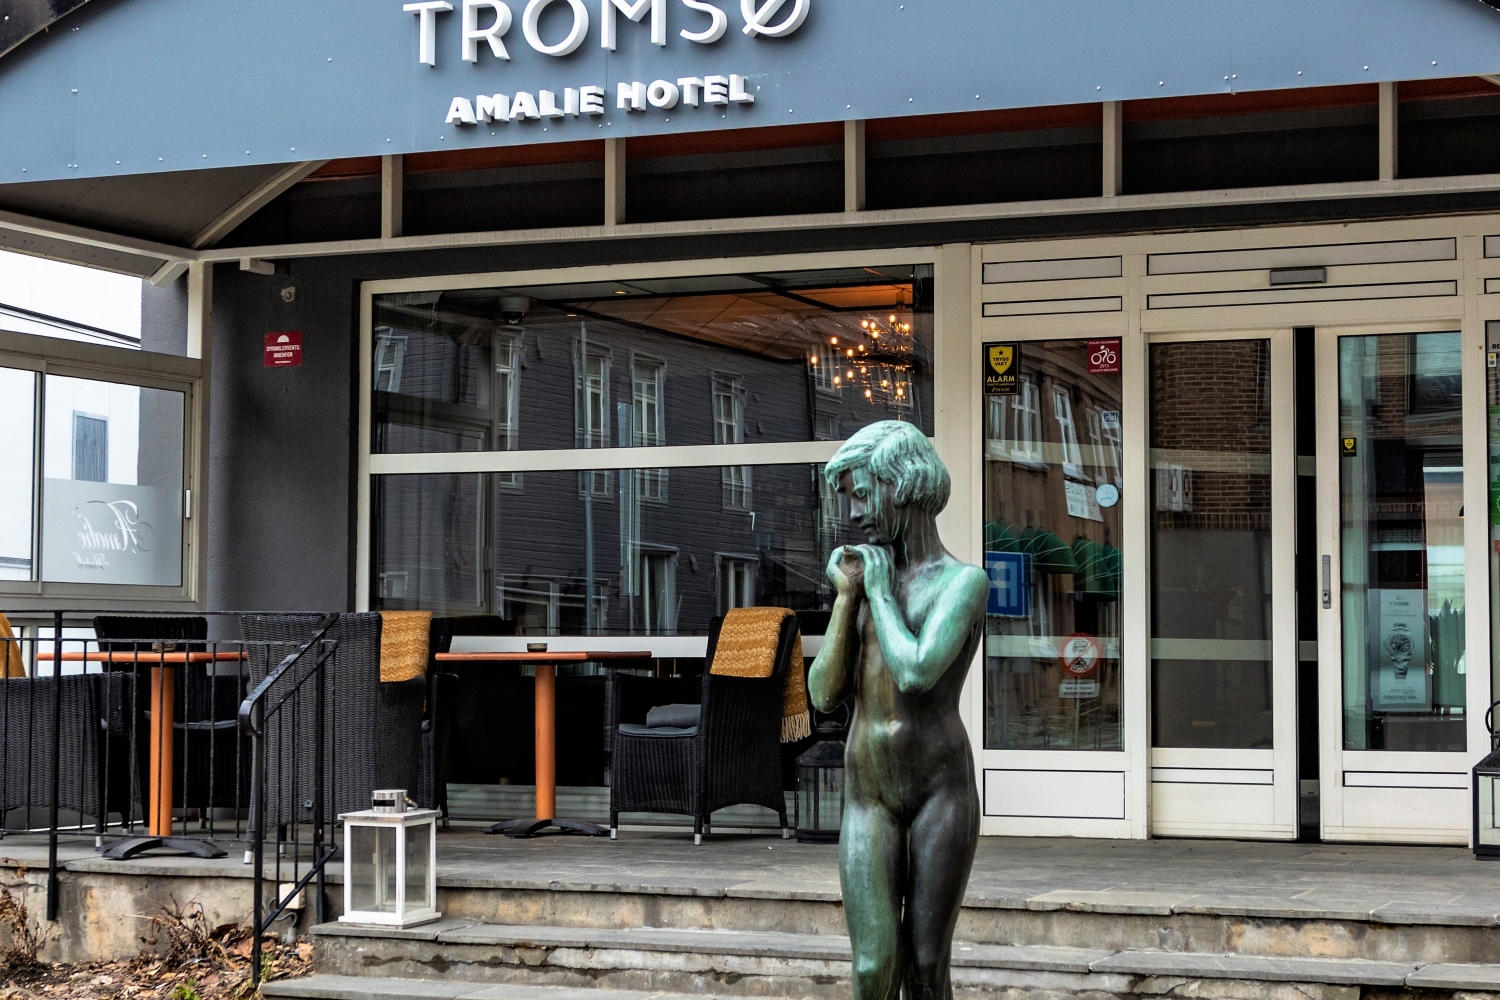 Enter Tromsø Amalie Hotel 